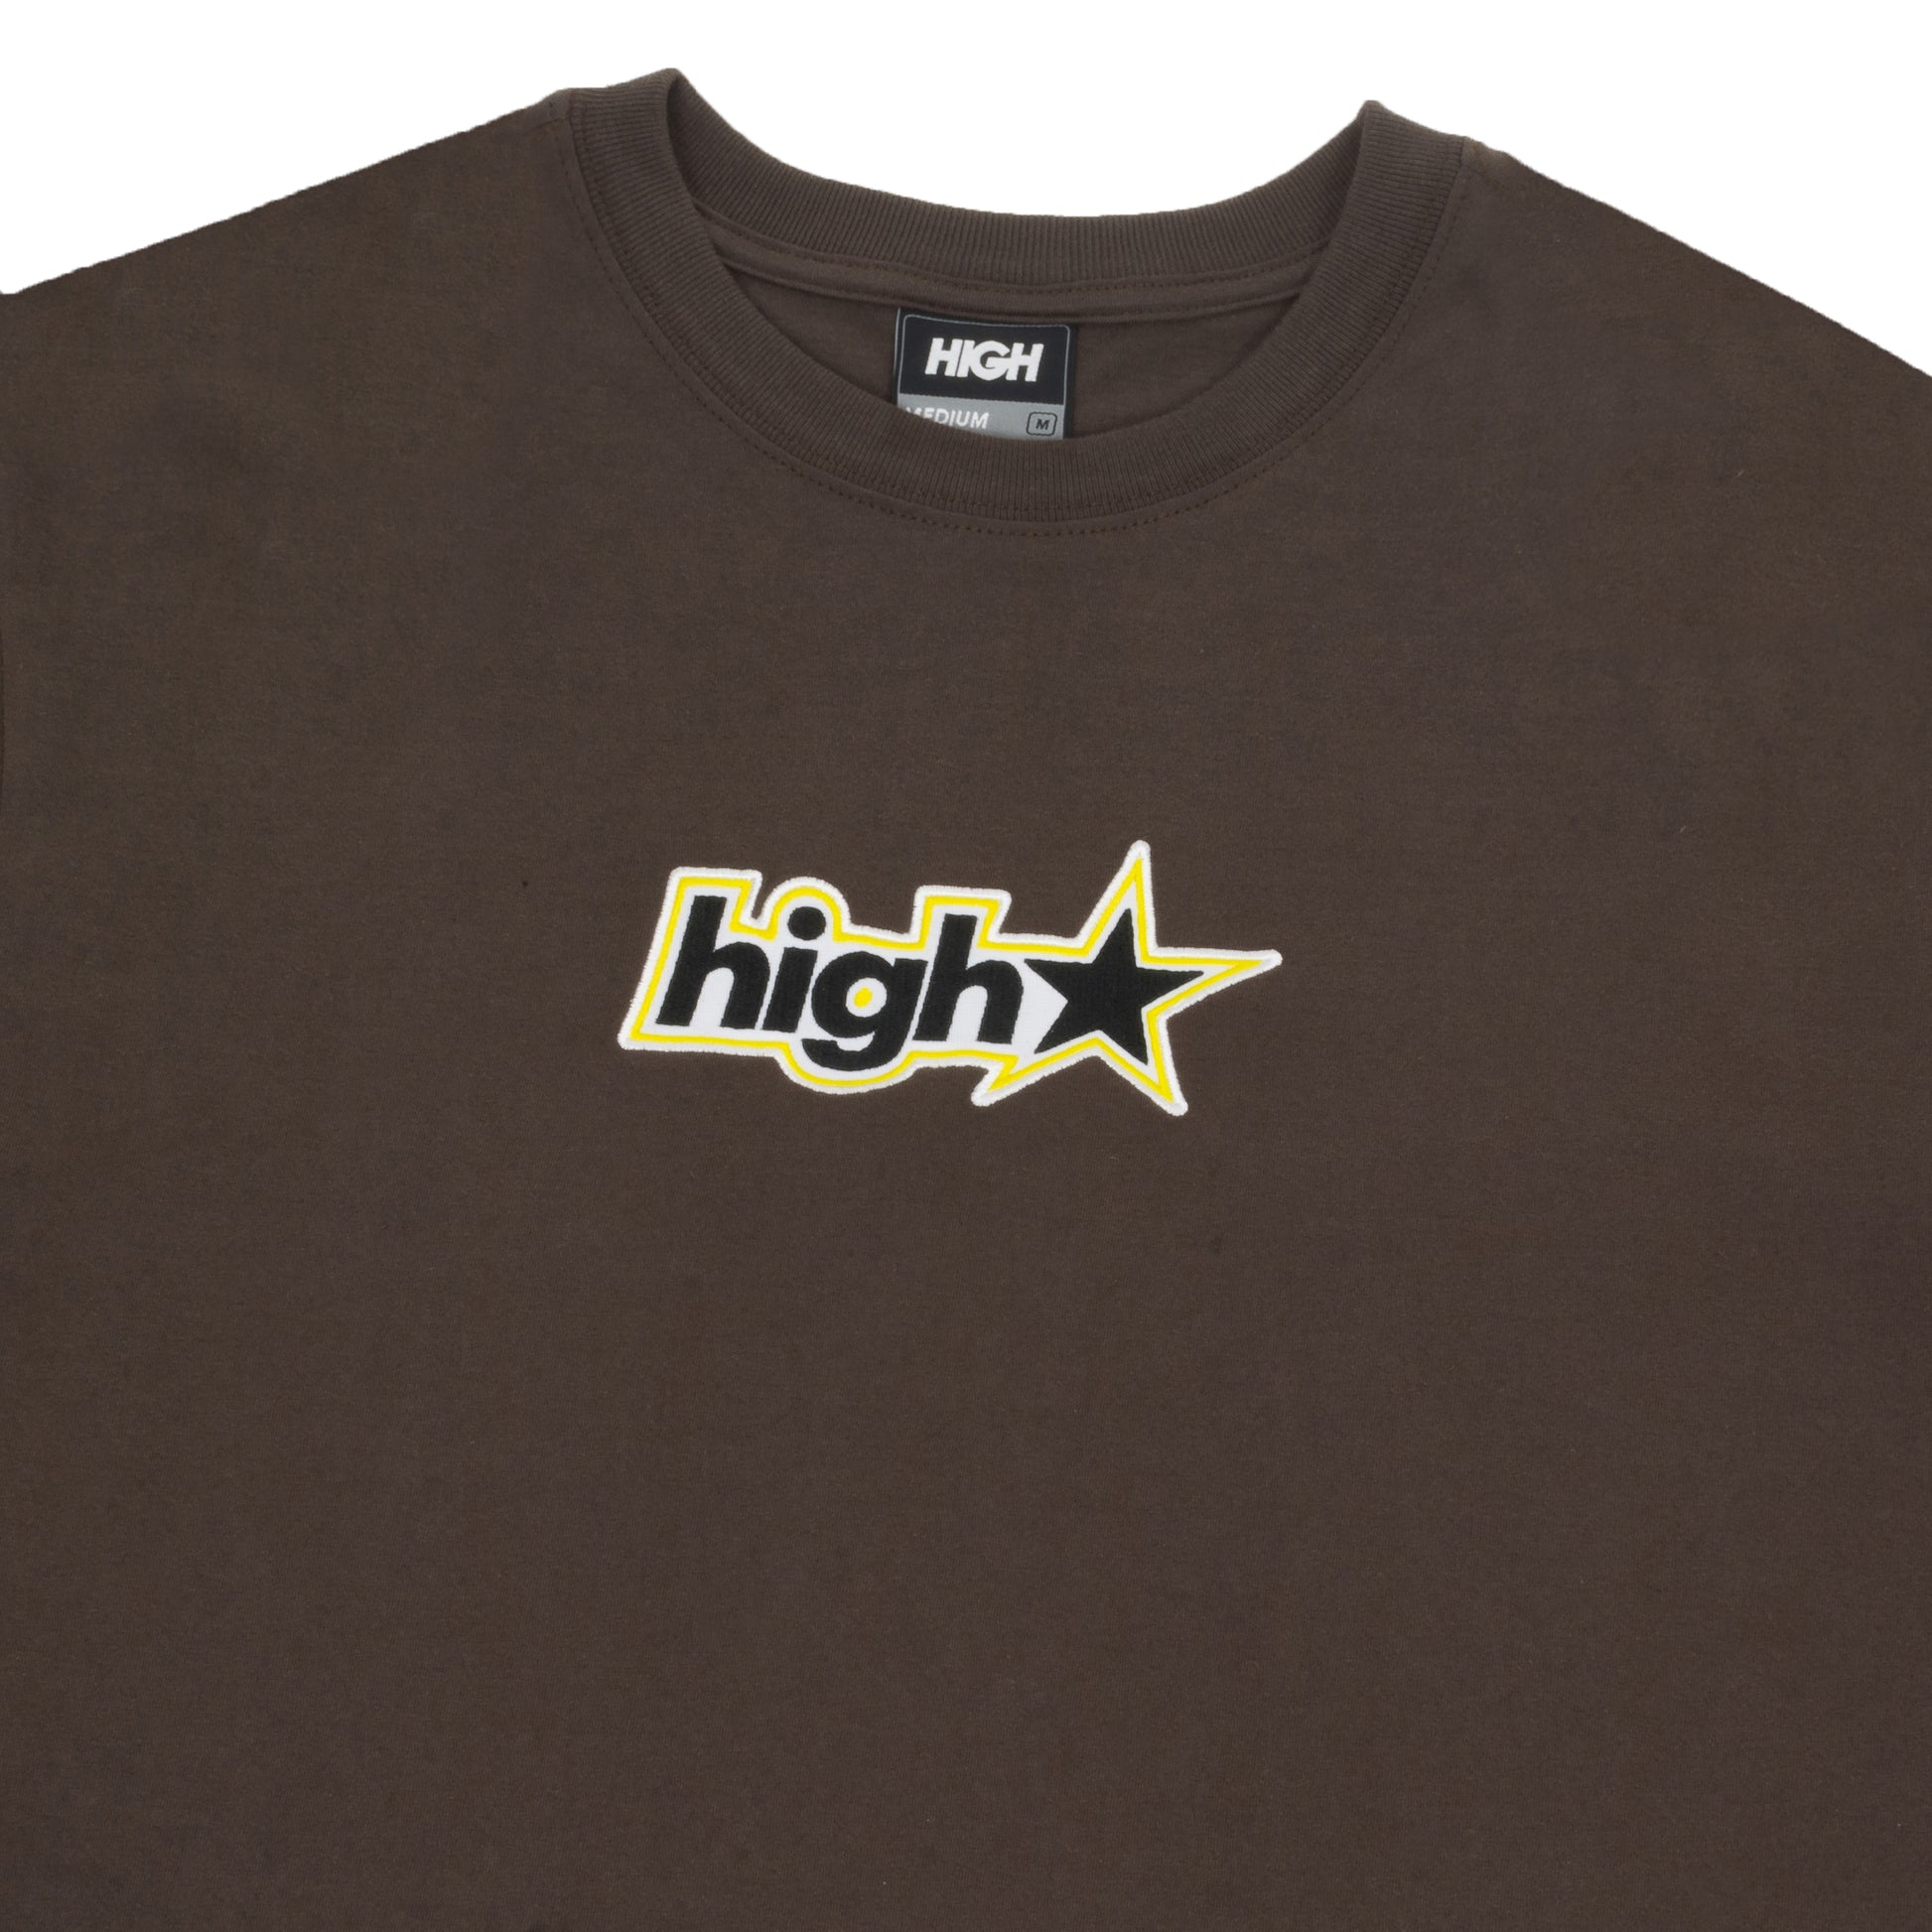 HIGH - Camiseta Highstar "Brown" - THE GAME